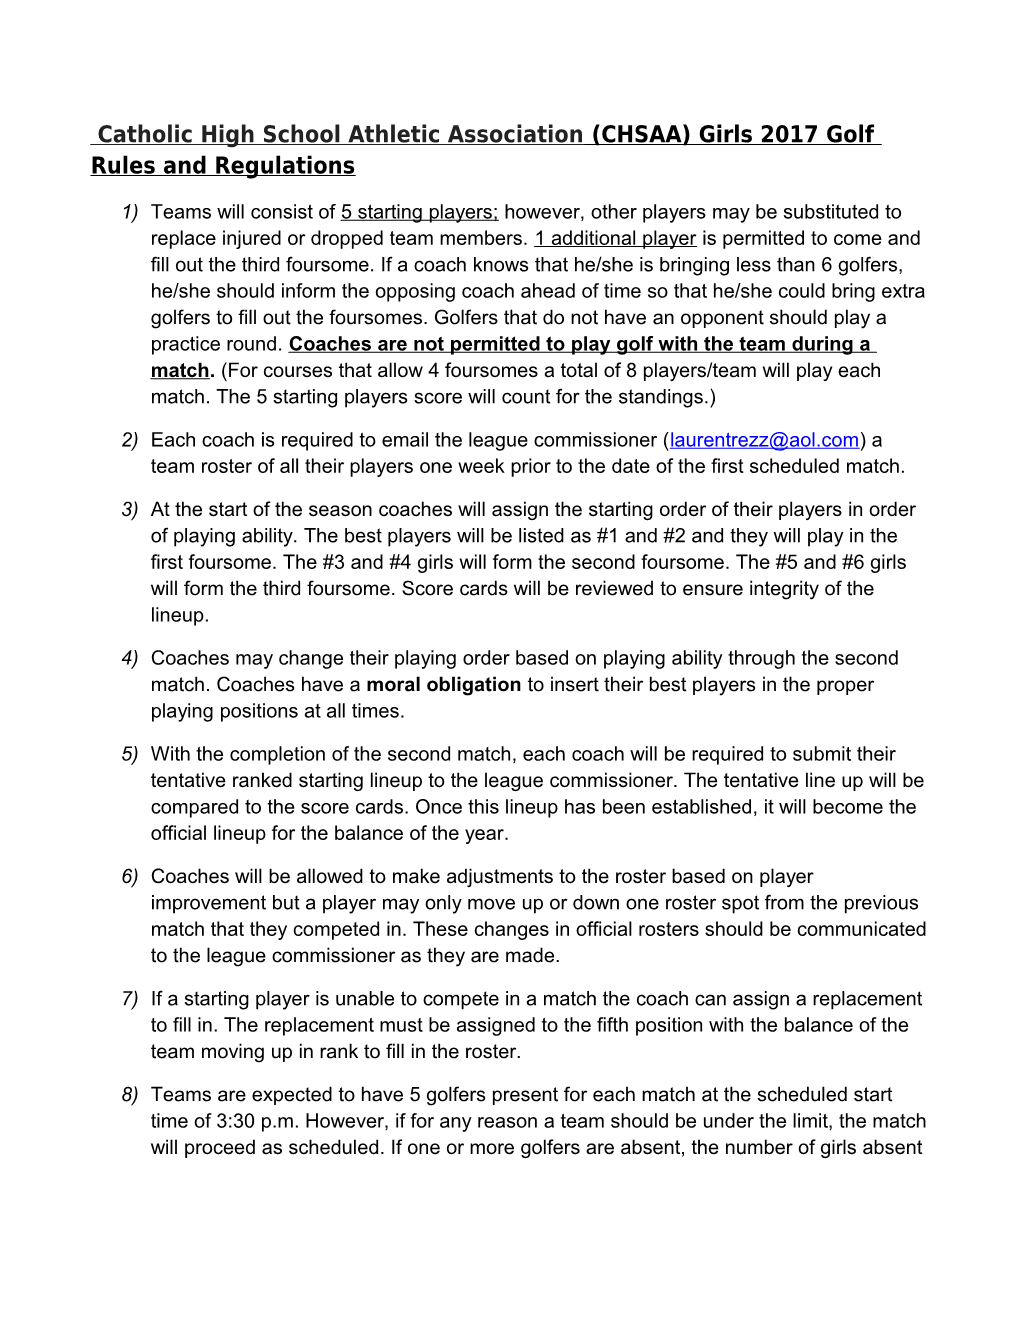 Catholic High School Athletic Association (CHSAA) Girls 2017 Golf Rules and Regulations